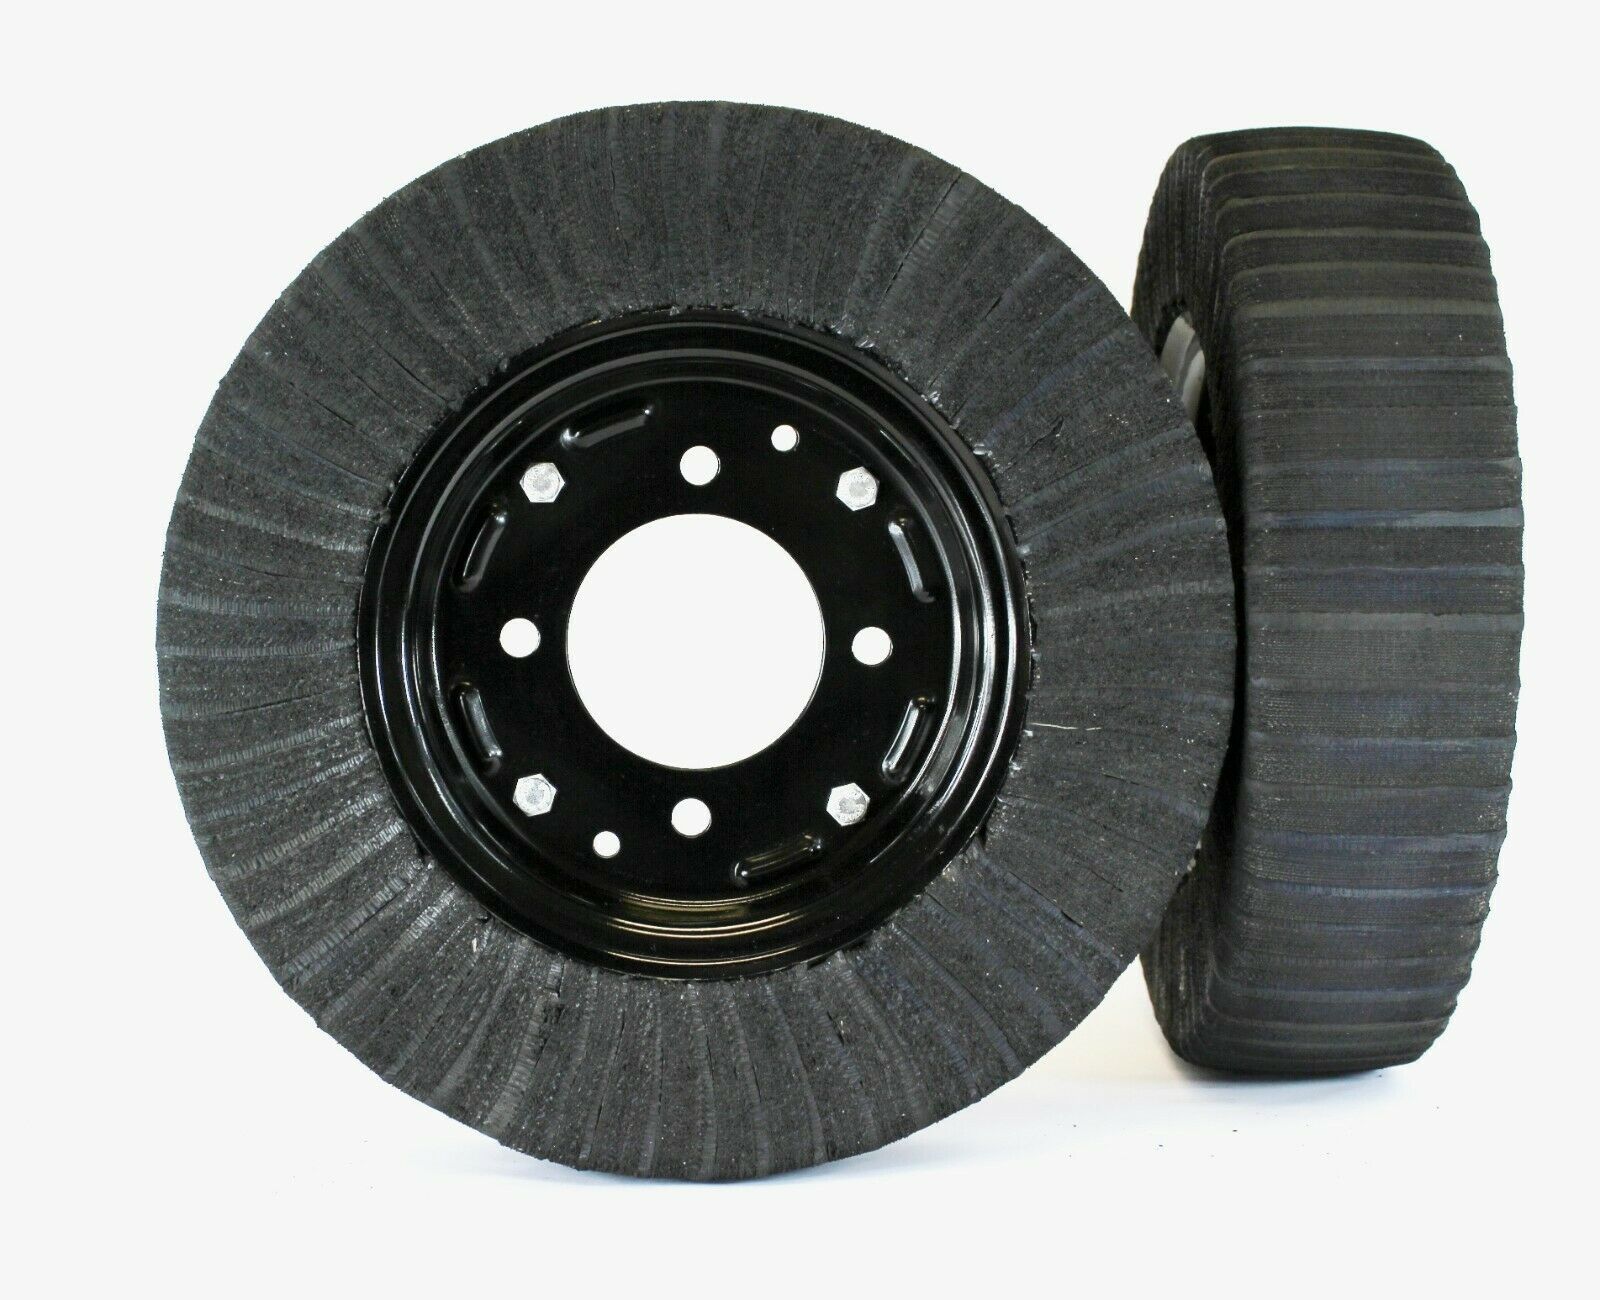 1 Tailwheel For Rotary Cutter Tire, 4" X 8"x15" Bush Hog Wheel Mower Trail Wheel